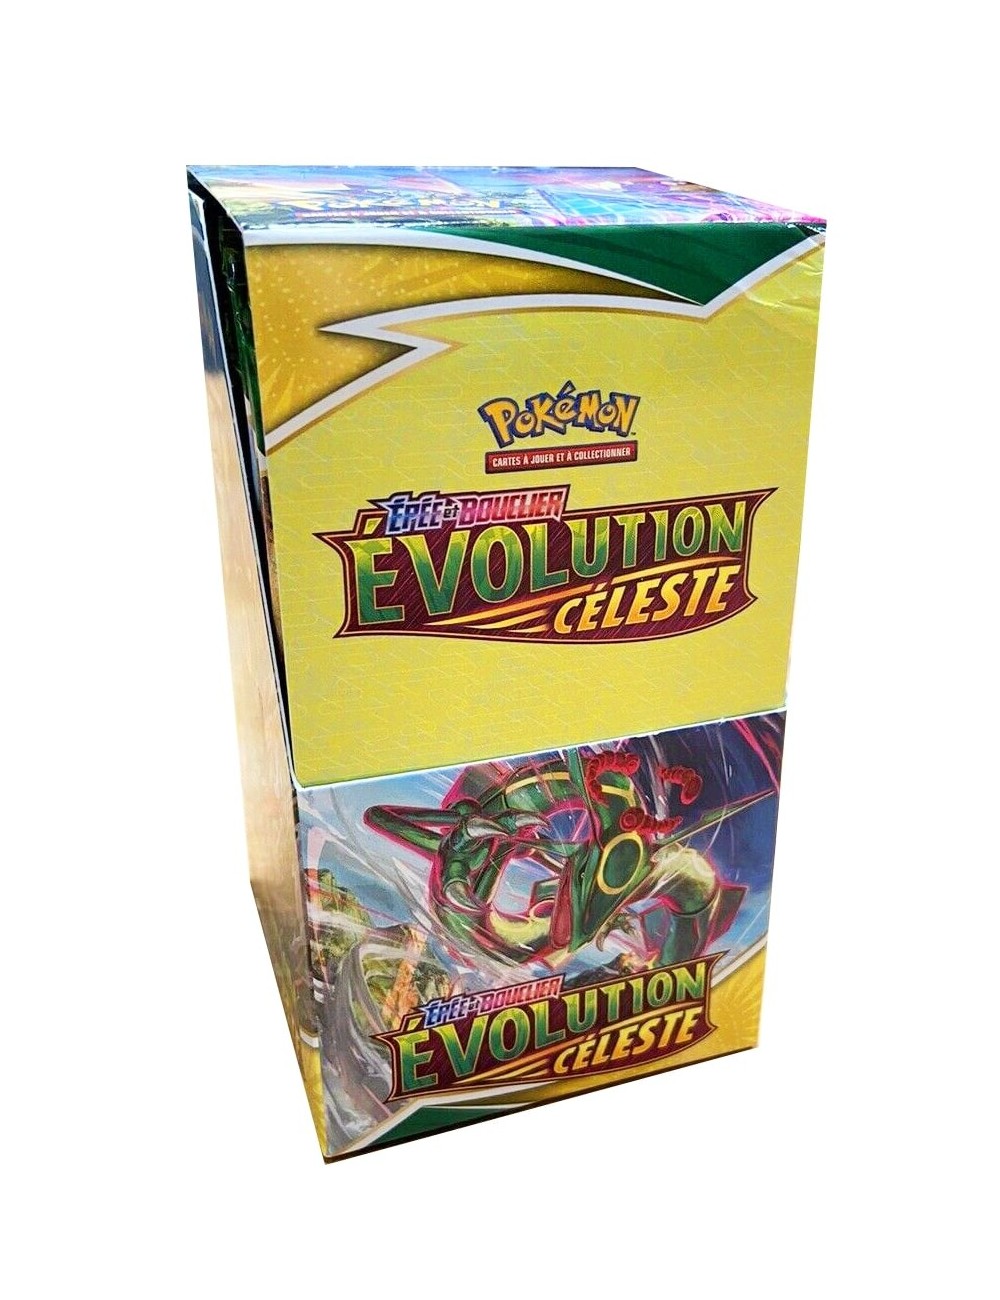 Pokémon - Demi Display Pokémon Evolution Céleste 18 Boosters